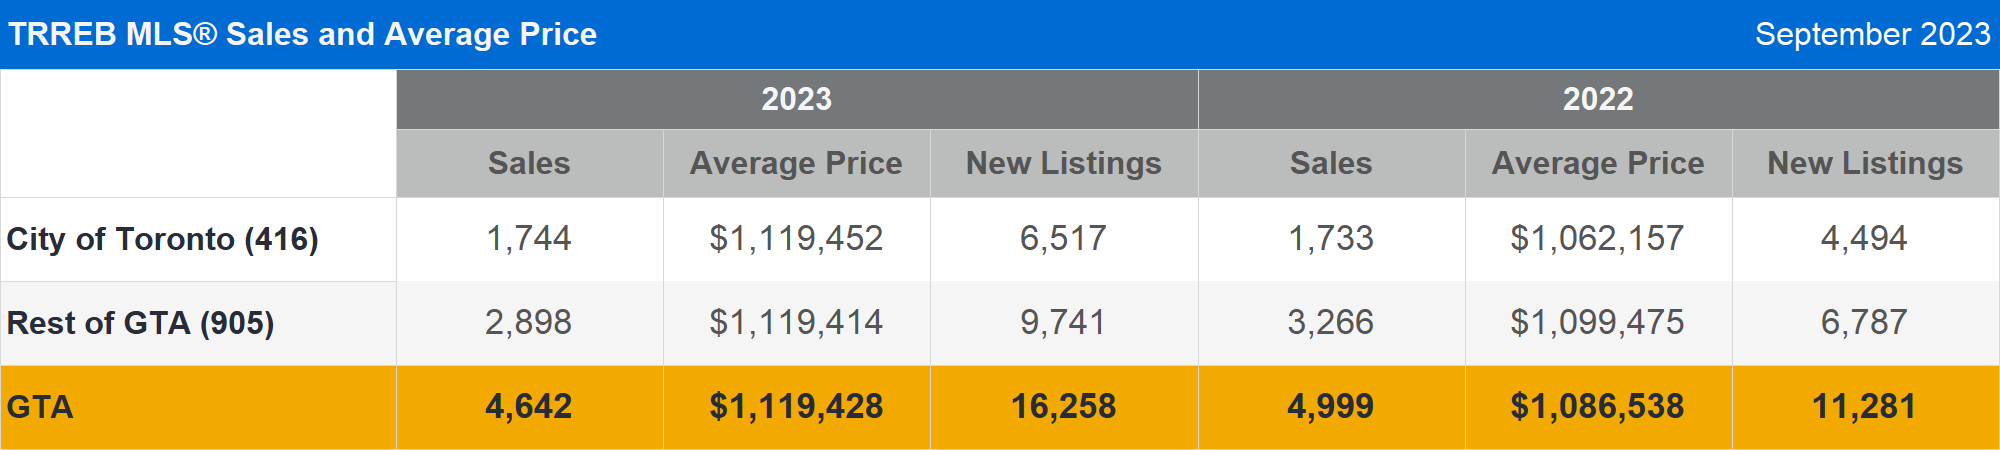 TRREB MLS® Sales and Average Price Caption: September 2023